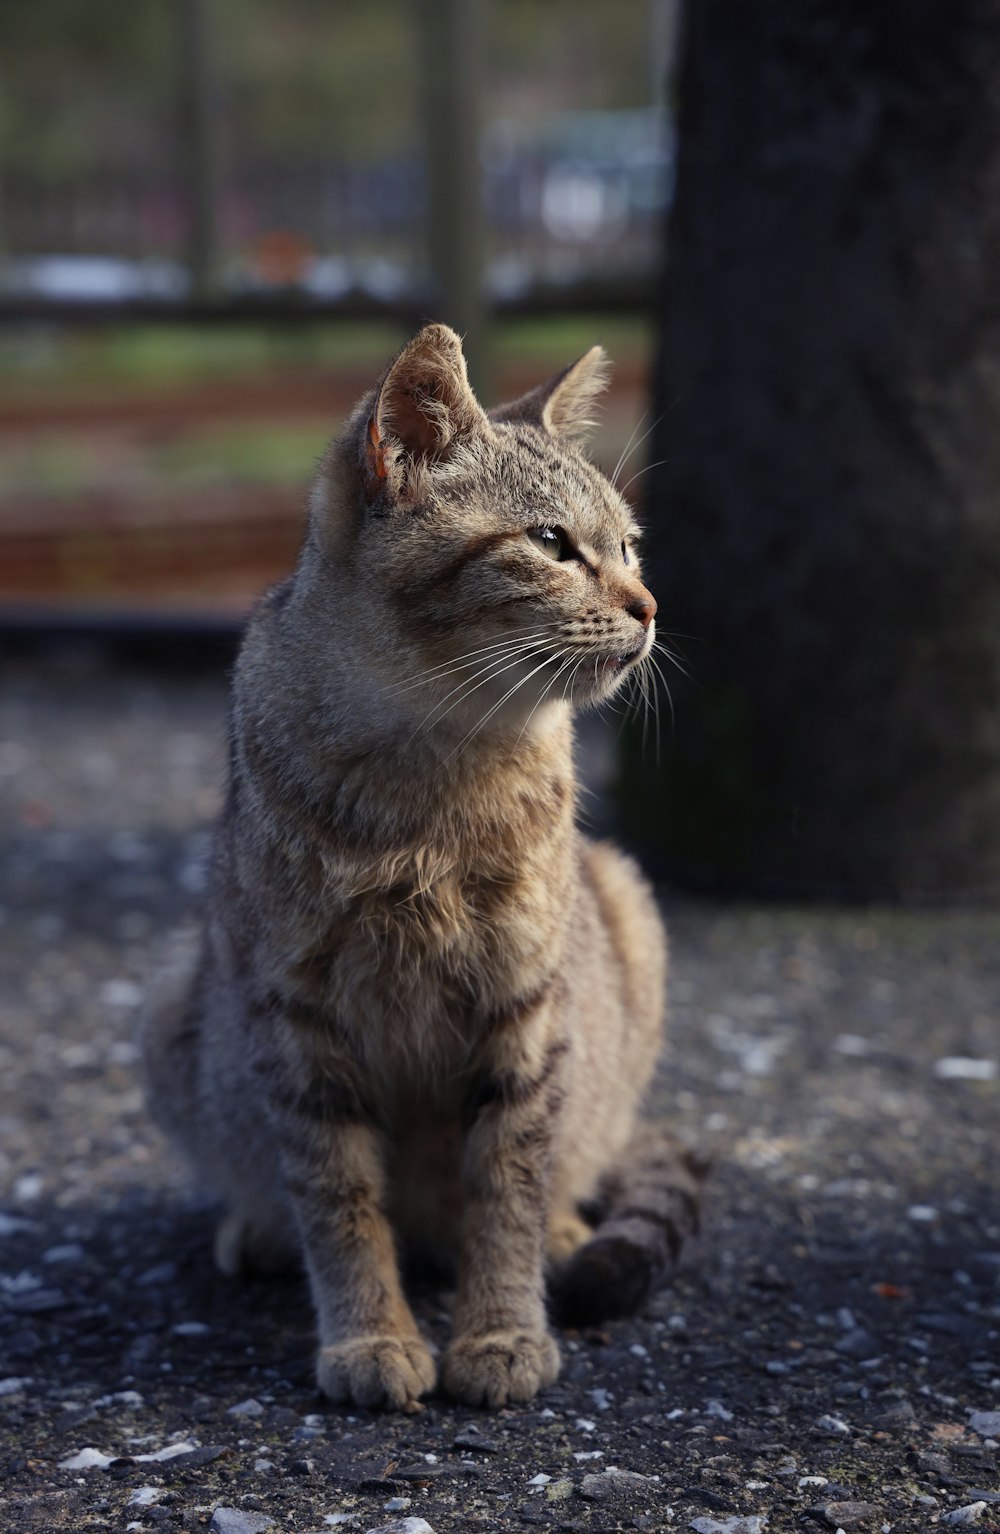 brown tabby cat on gray concrete floor